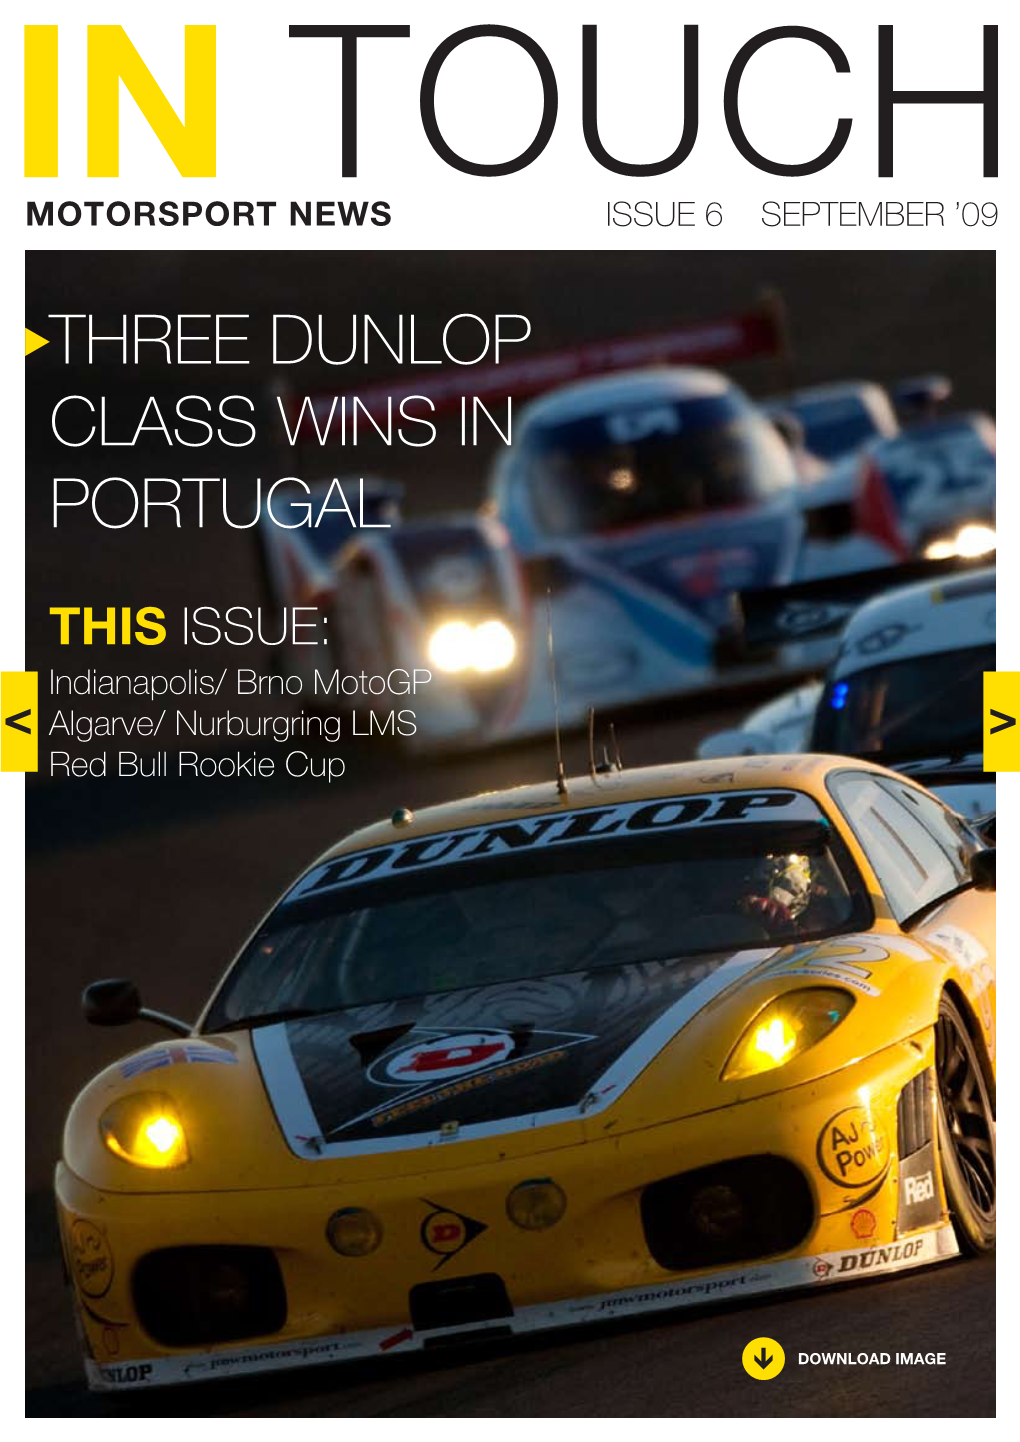 Three Dunlop Class Wins in Portugal